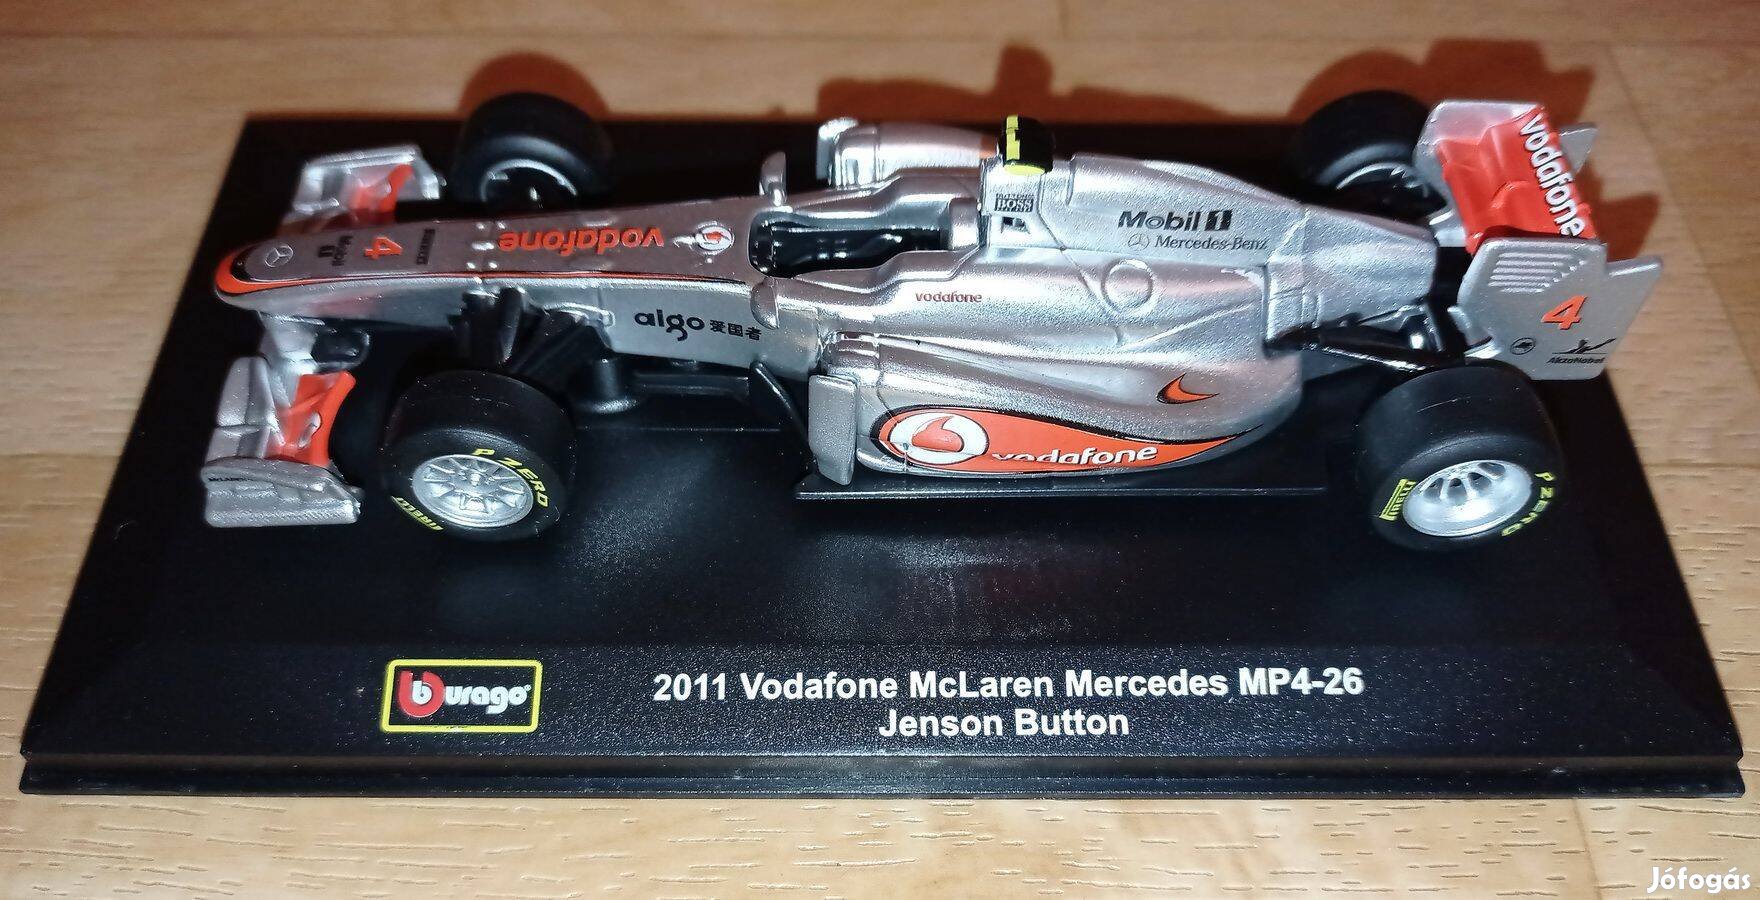 Bburago Vodafone Mclaren Mercedes MP4-26 modell autó (Jenson Button)